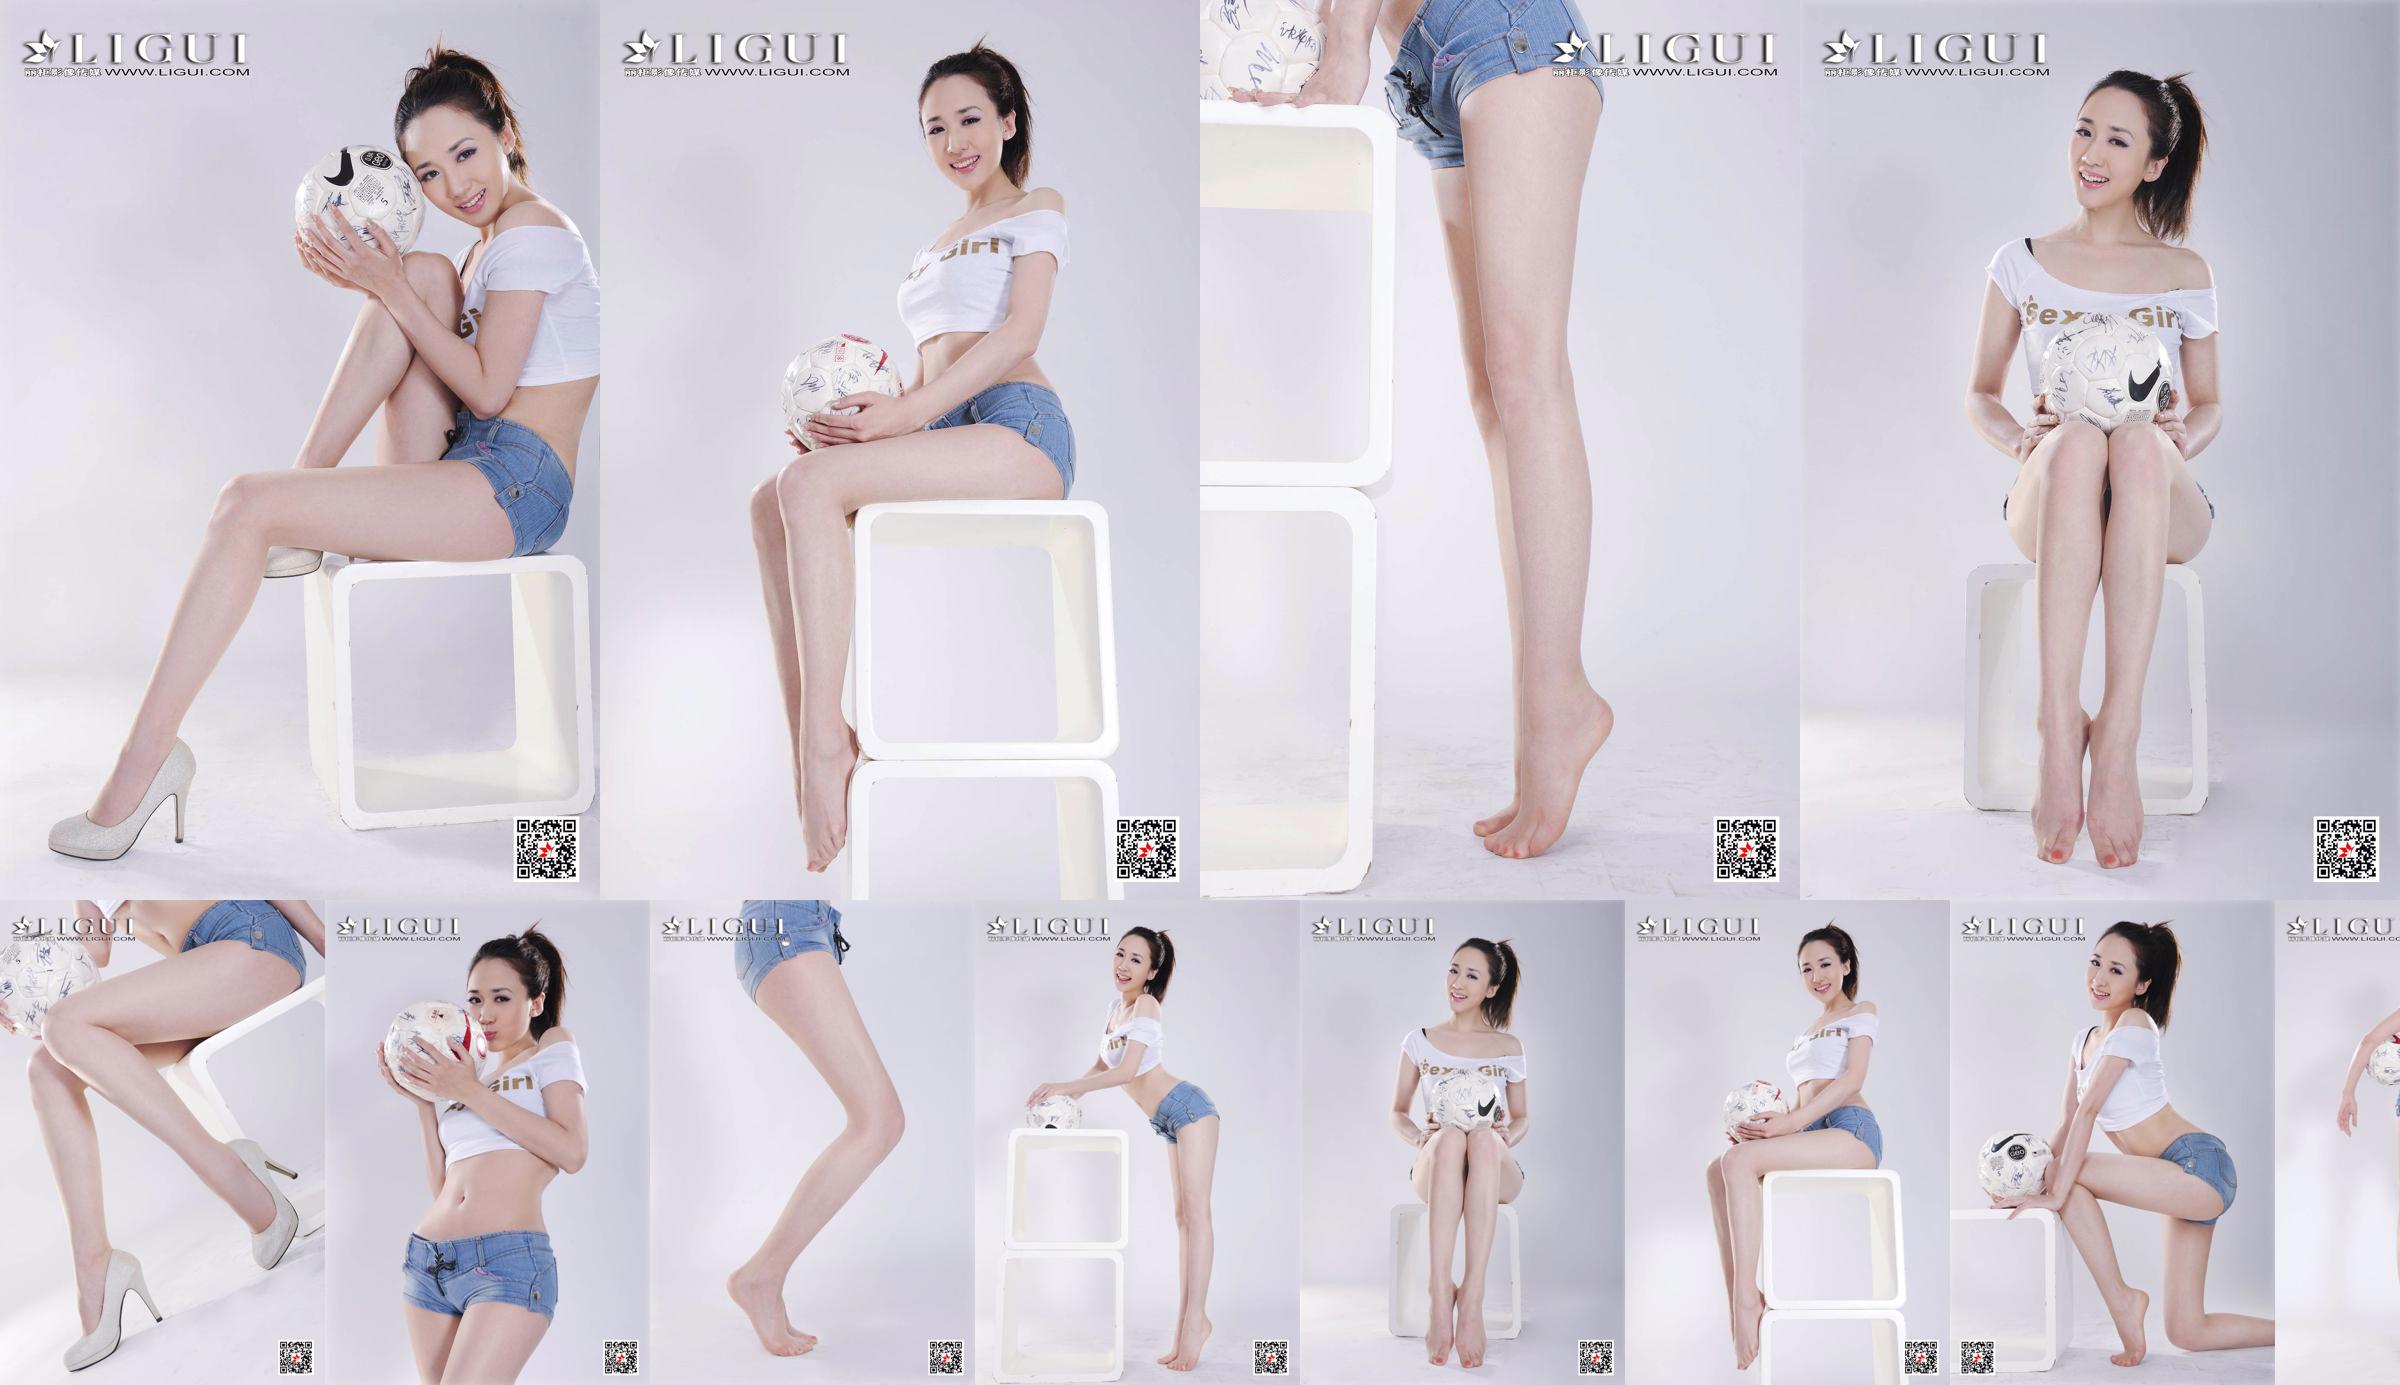 Model Qiu Chen "Gadis Sepak Bola Celana Super Pendek" [LIGUI] No.5c6728 Halaman 1